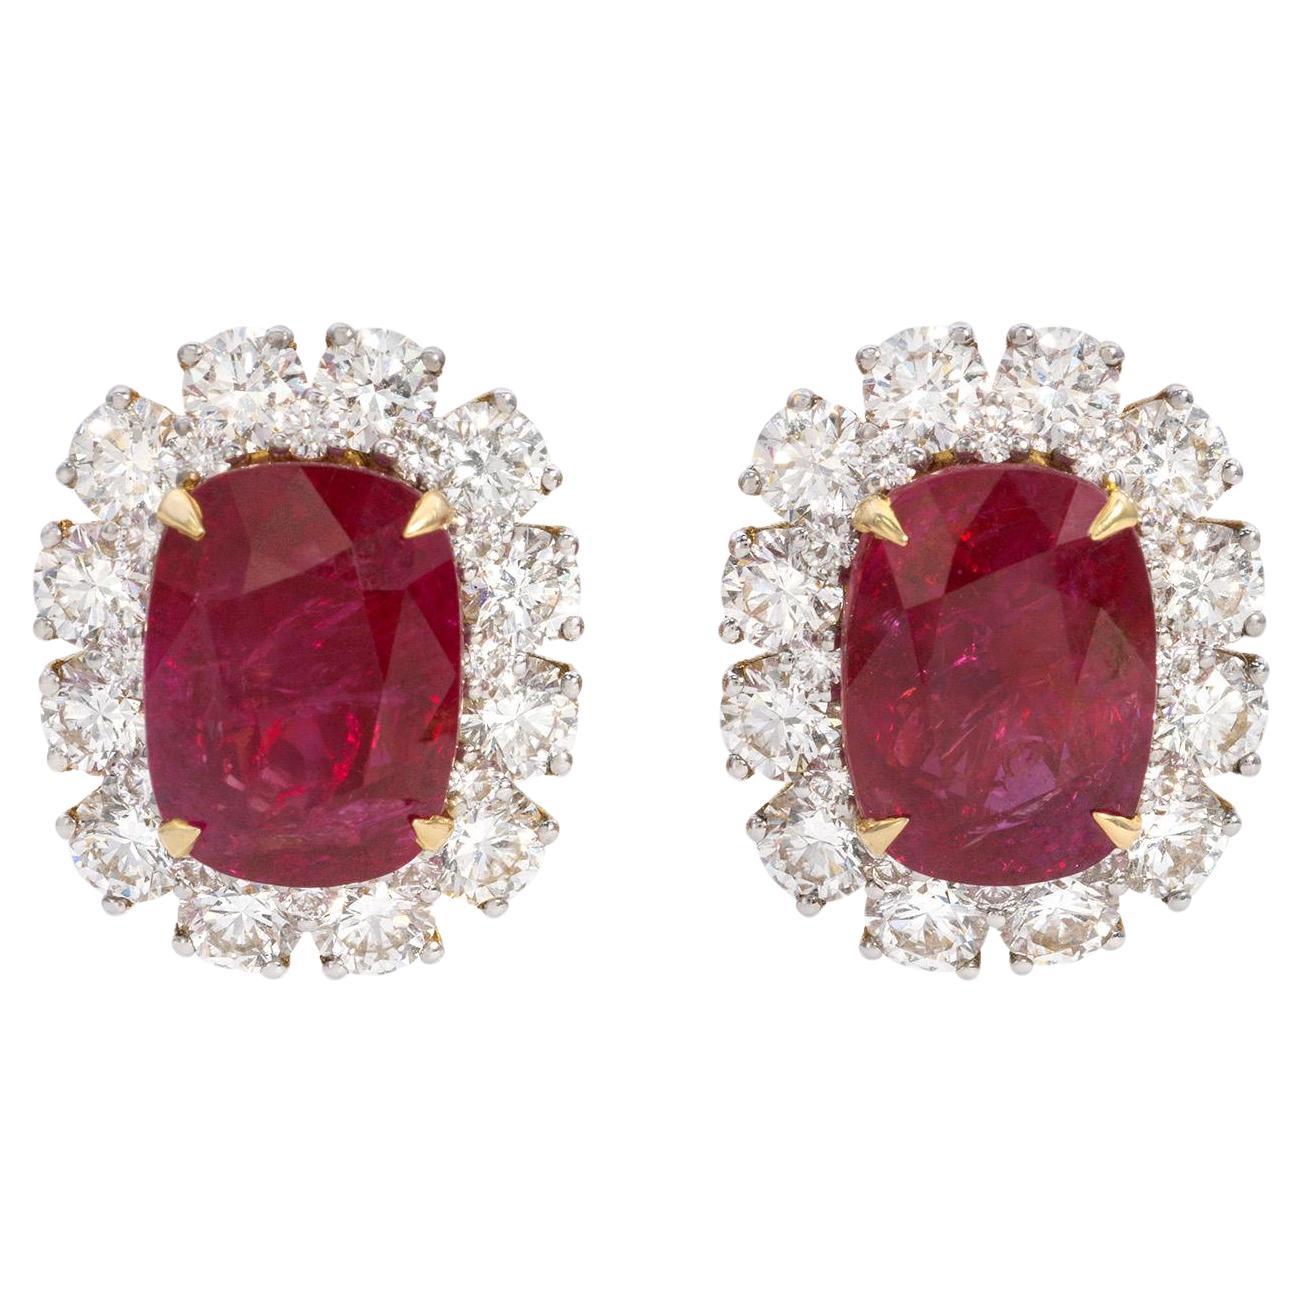 SSEF 11 Carat No Heat Natural Burmese Ruby and Diamond 18K Gold Earrings